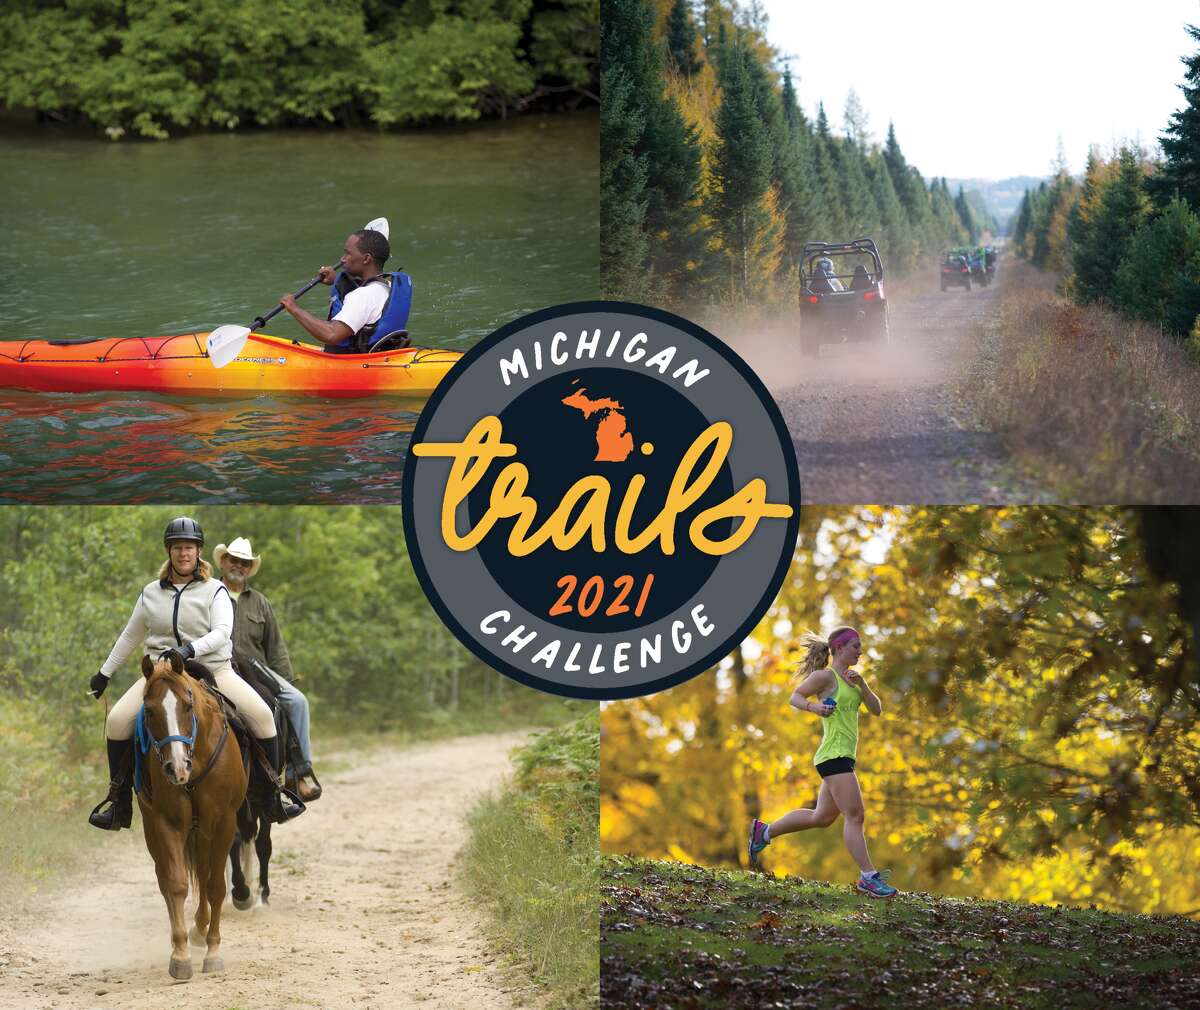 Michigan Trails Week Challenge starts Sept. 19 and ends Sept. 26.